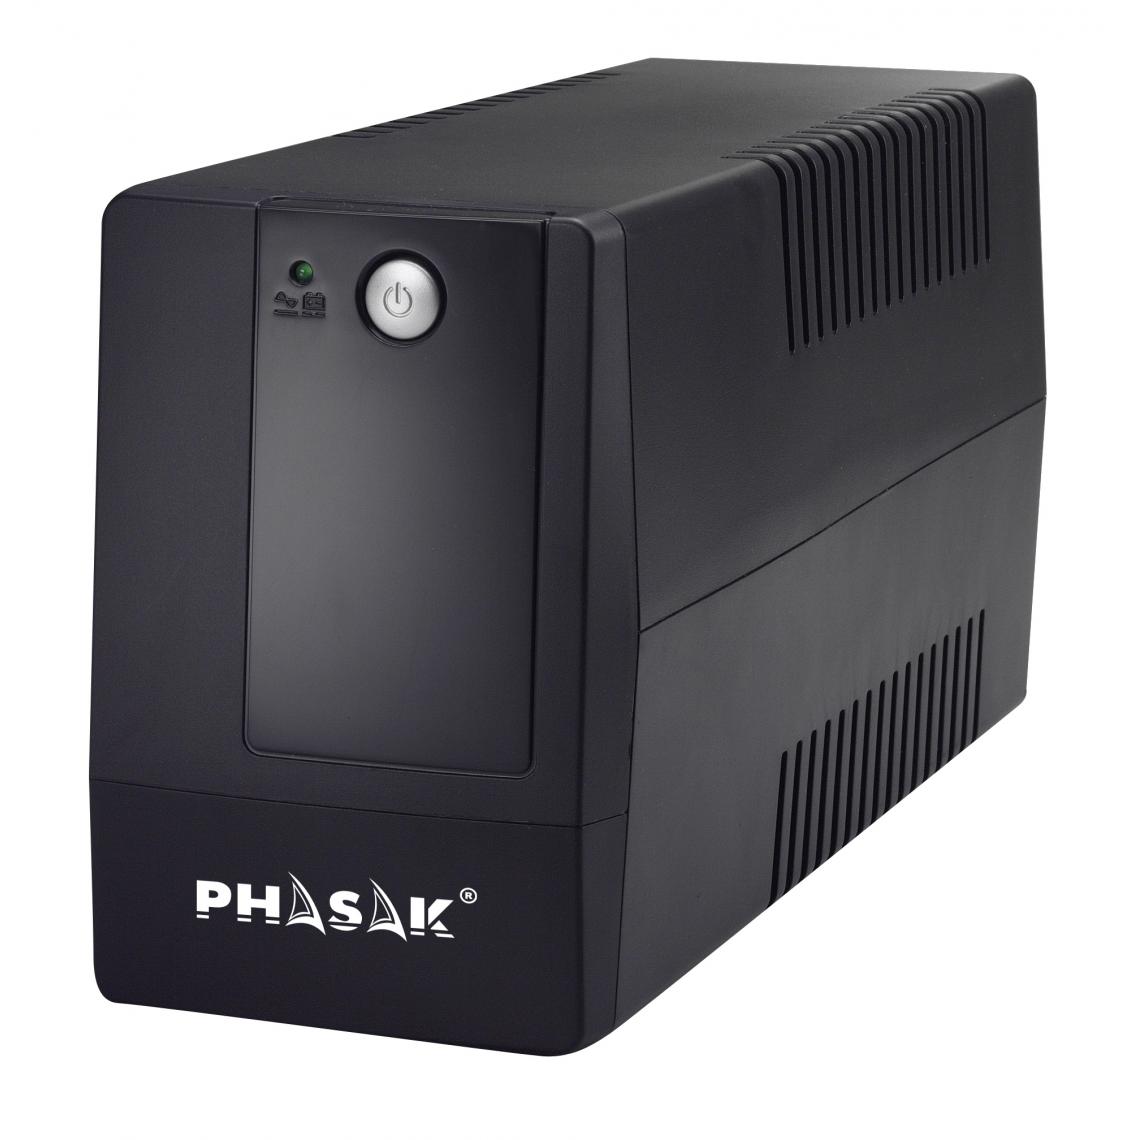 Phasak - PHASAK ONDULEUR PH 9406 600 VA - Onduleur